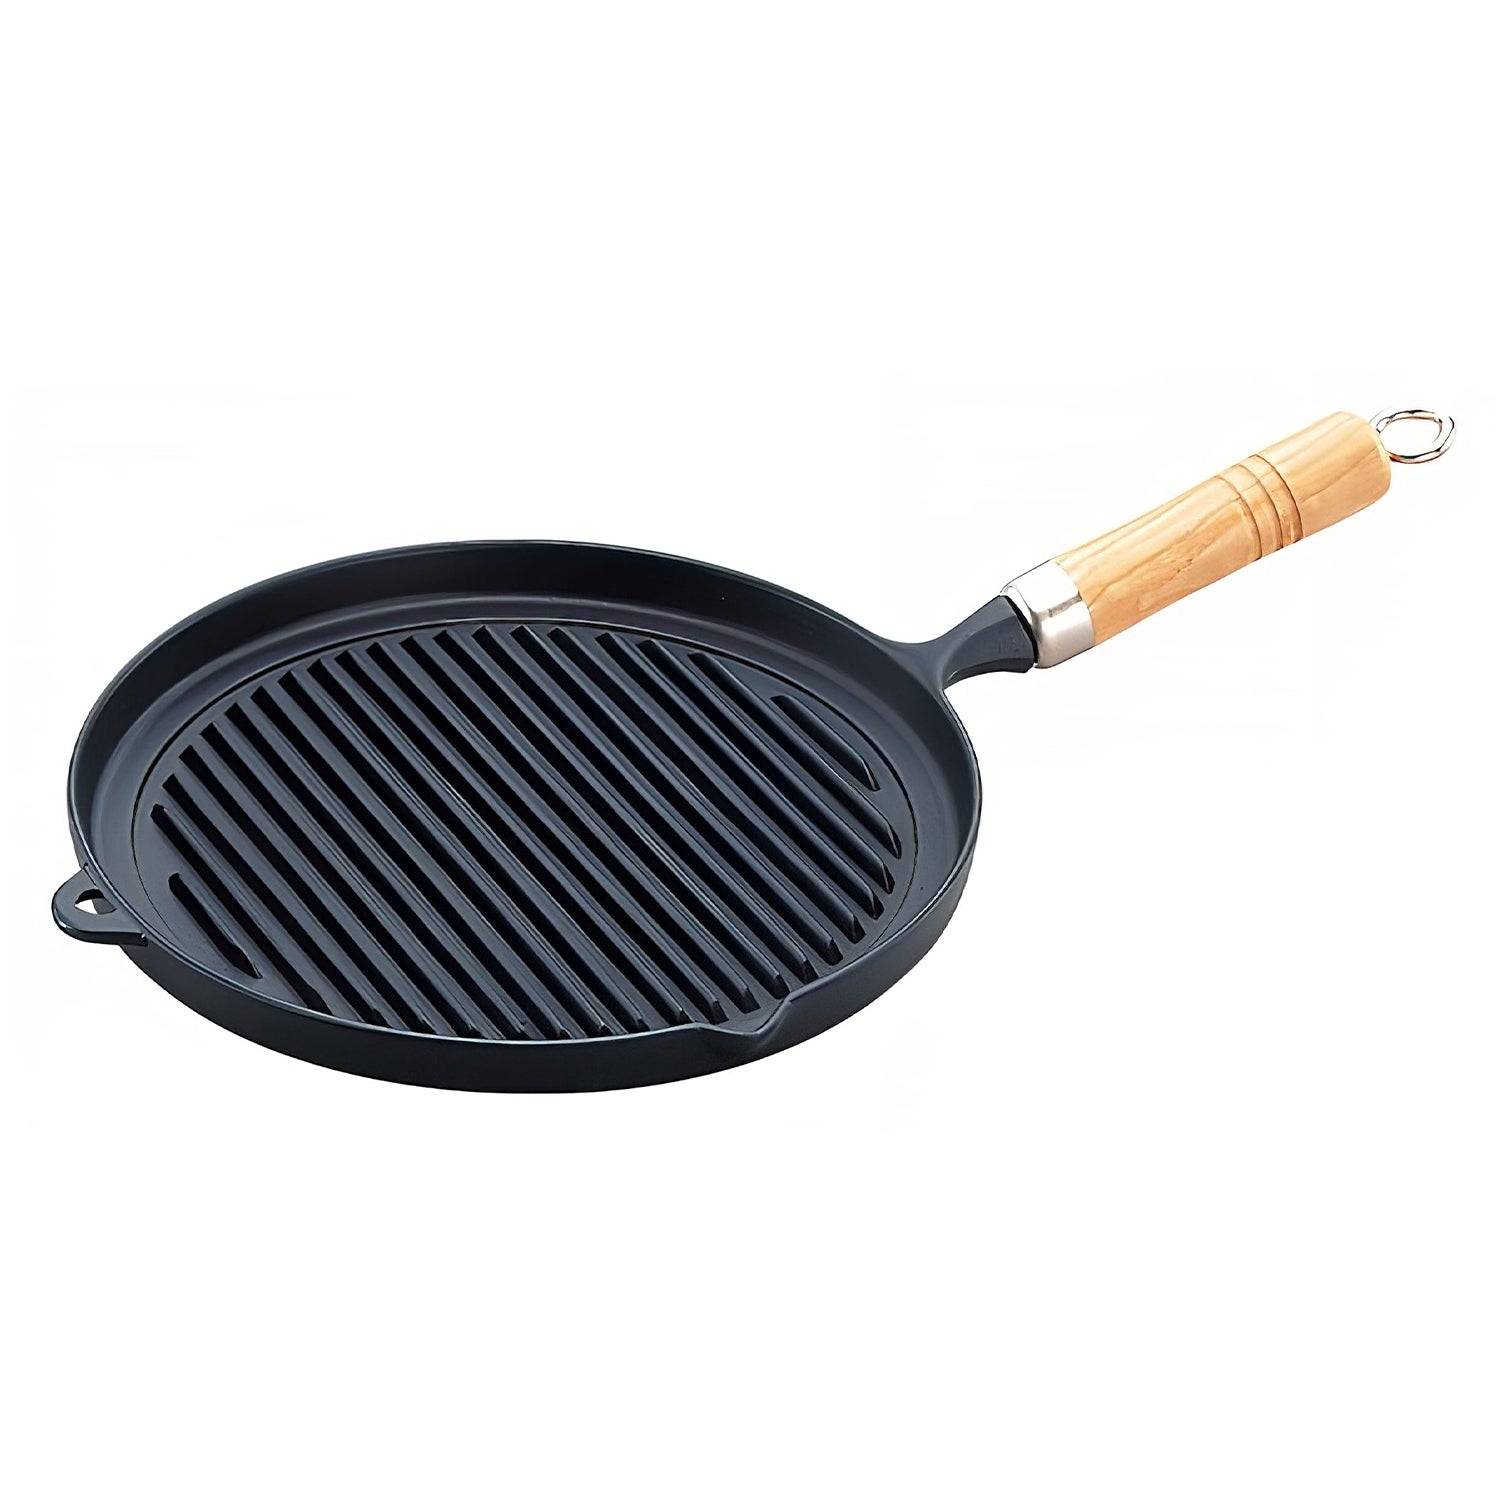 Iwachu Iron Omelette Pan, Medium